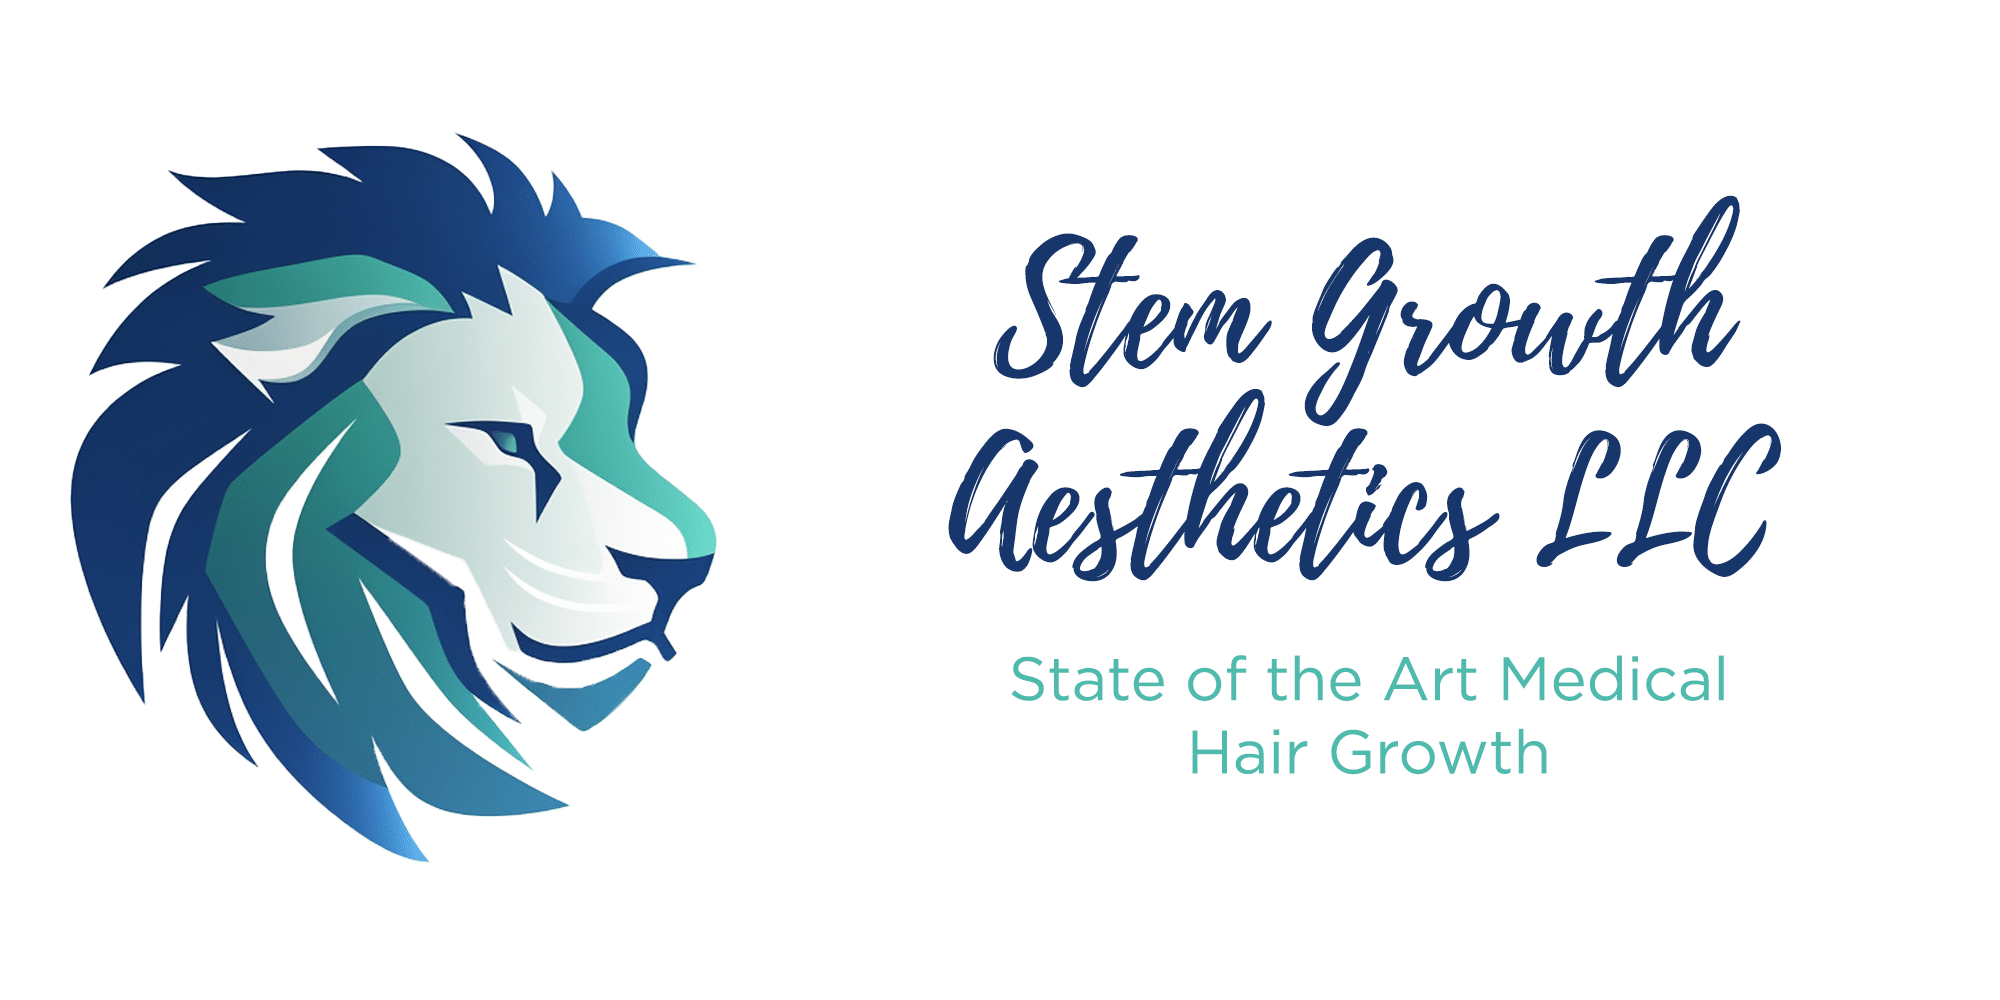 Stem Growth Aesthetics